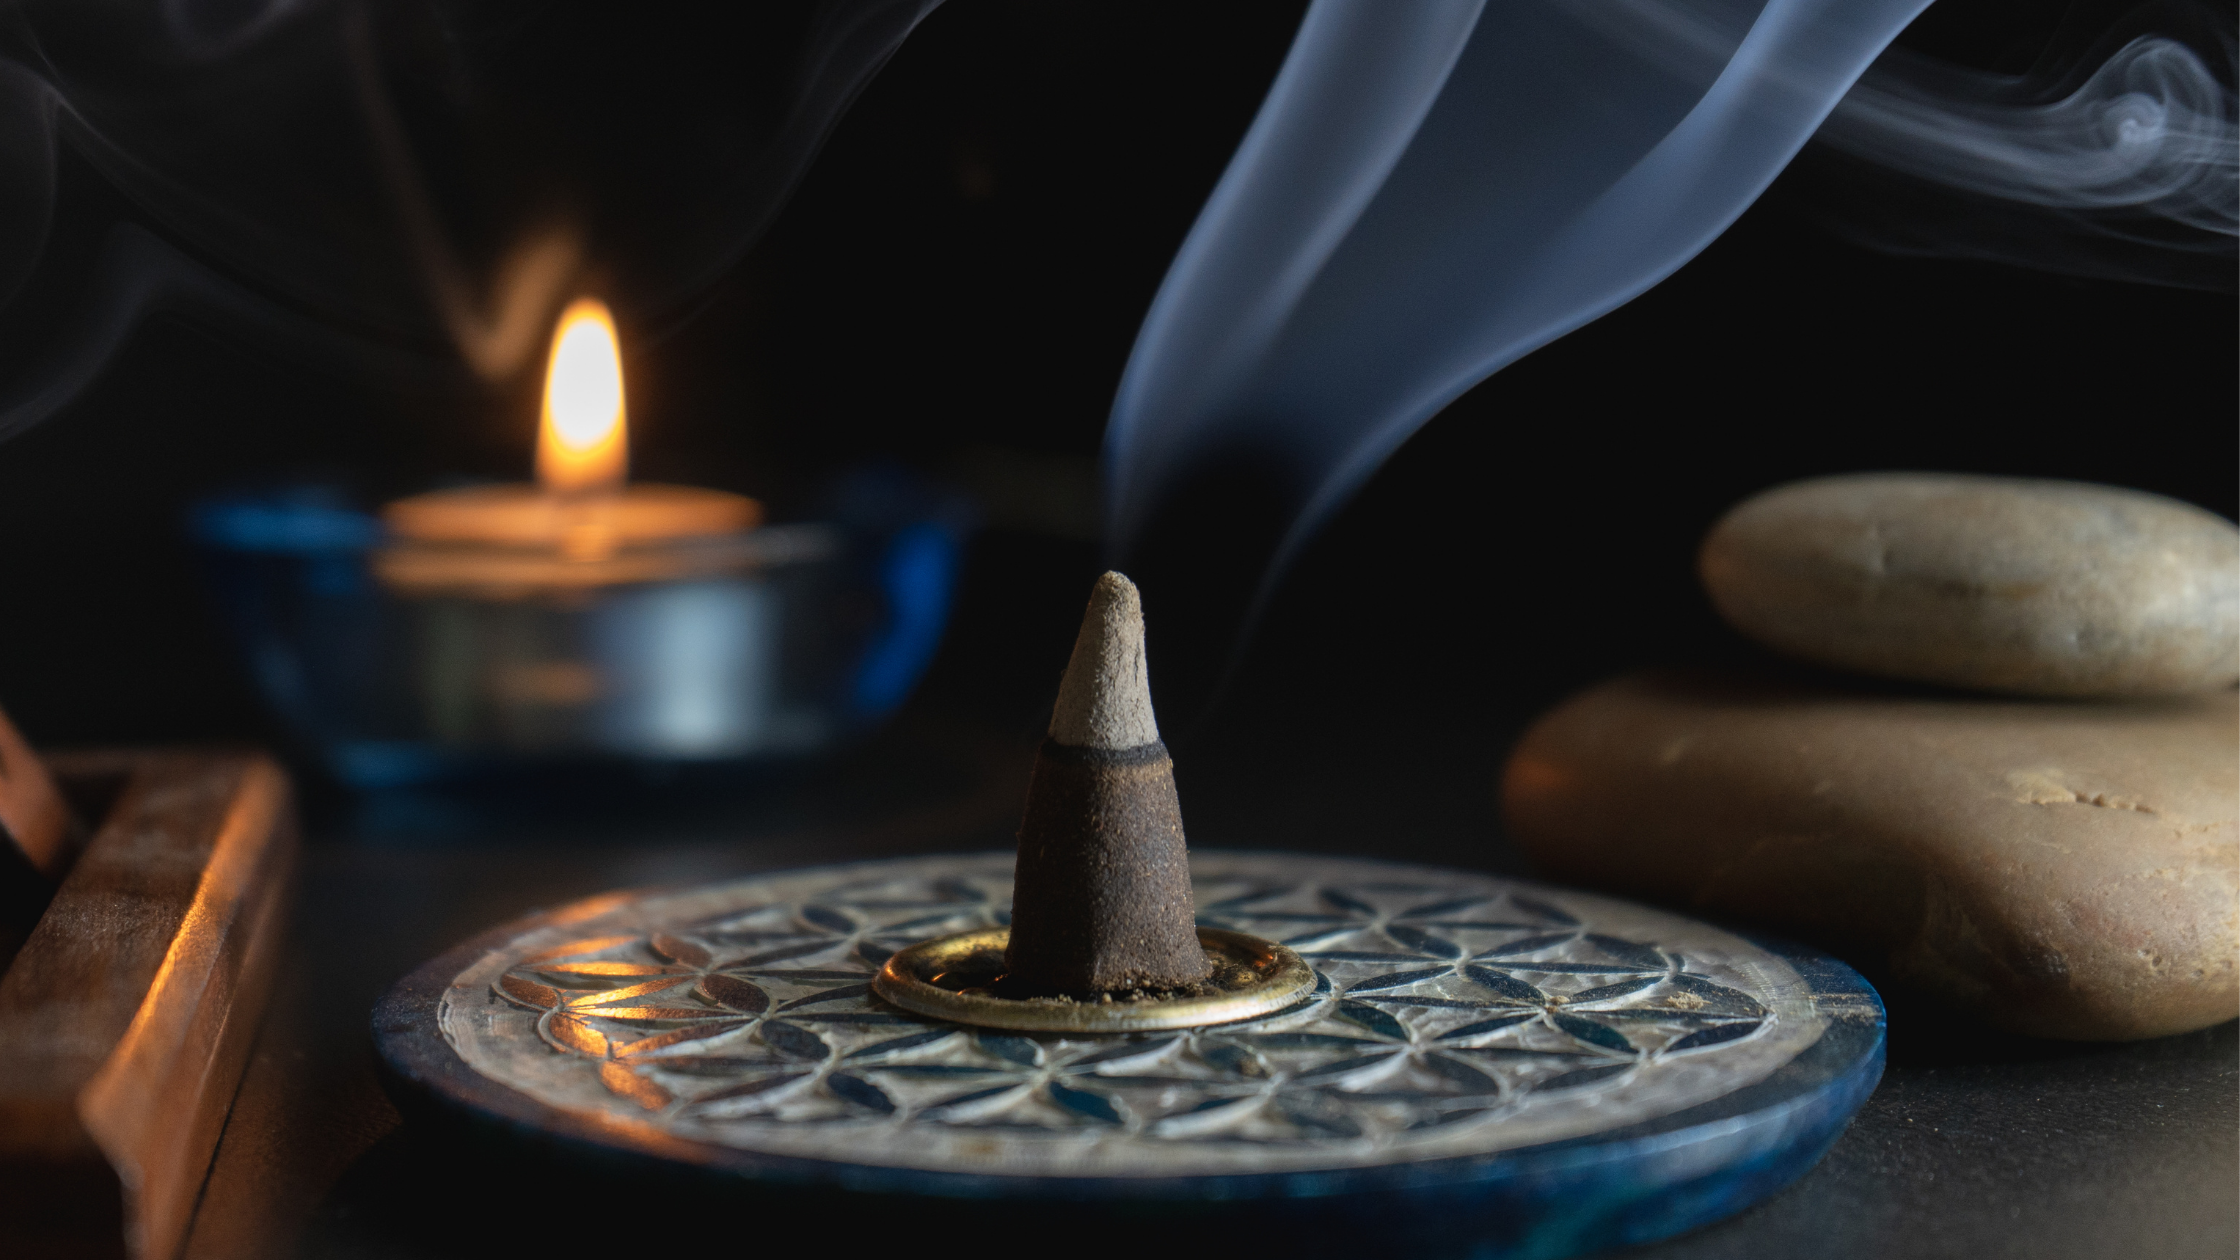   incense cone in a decorative holder  